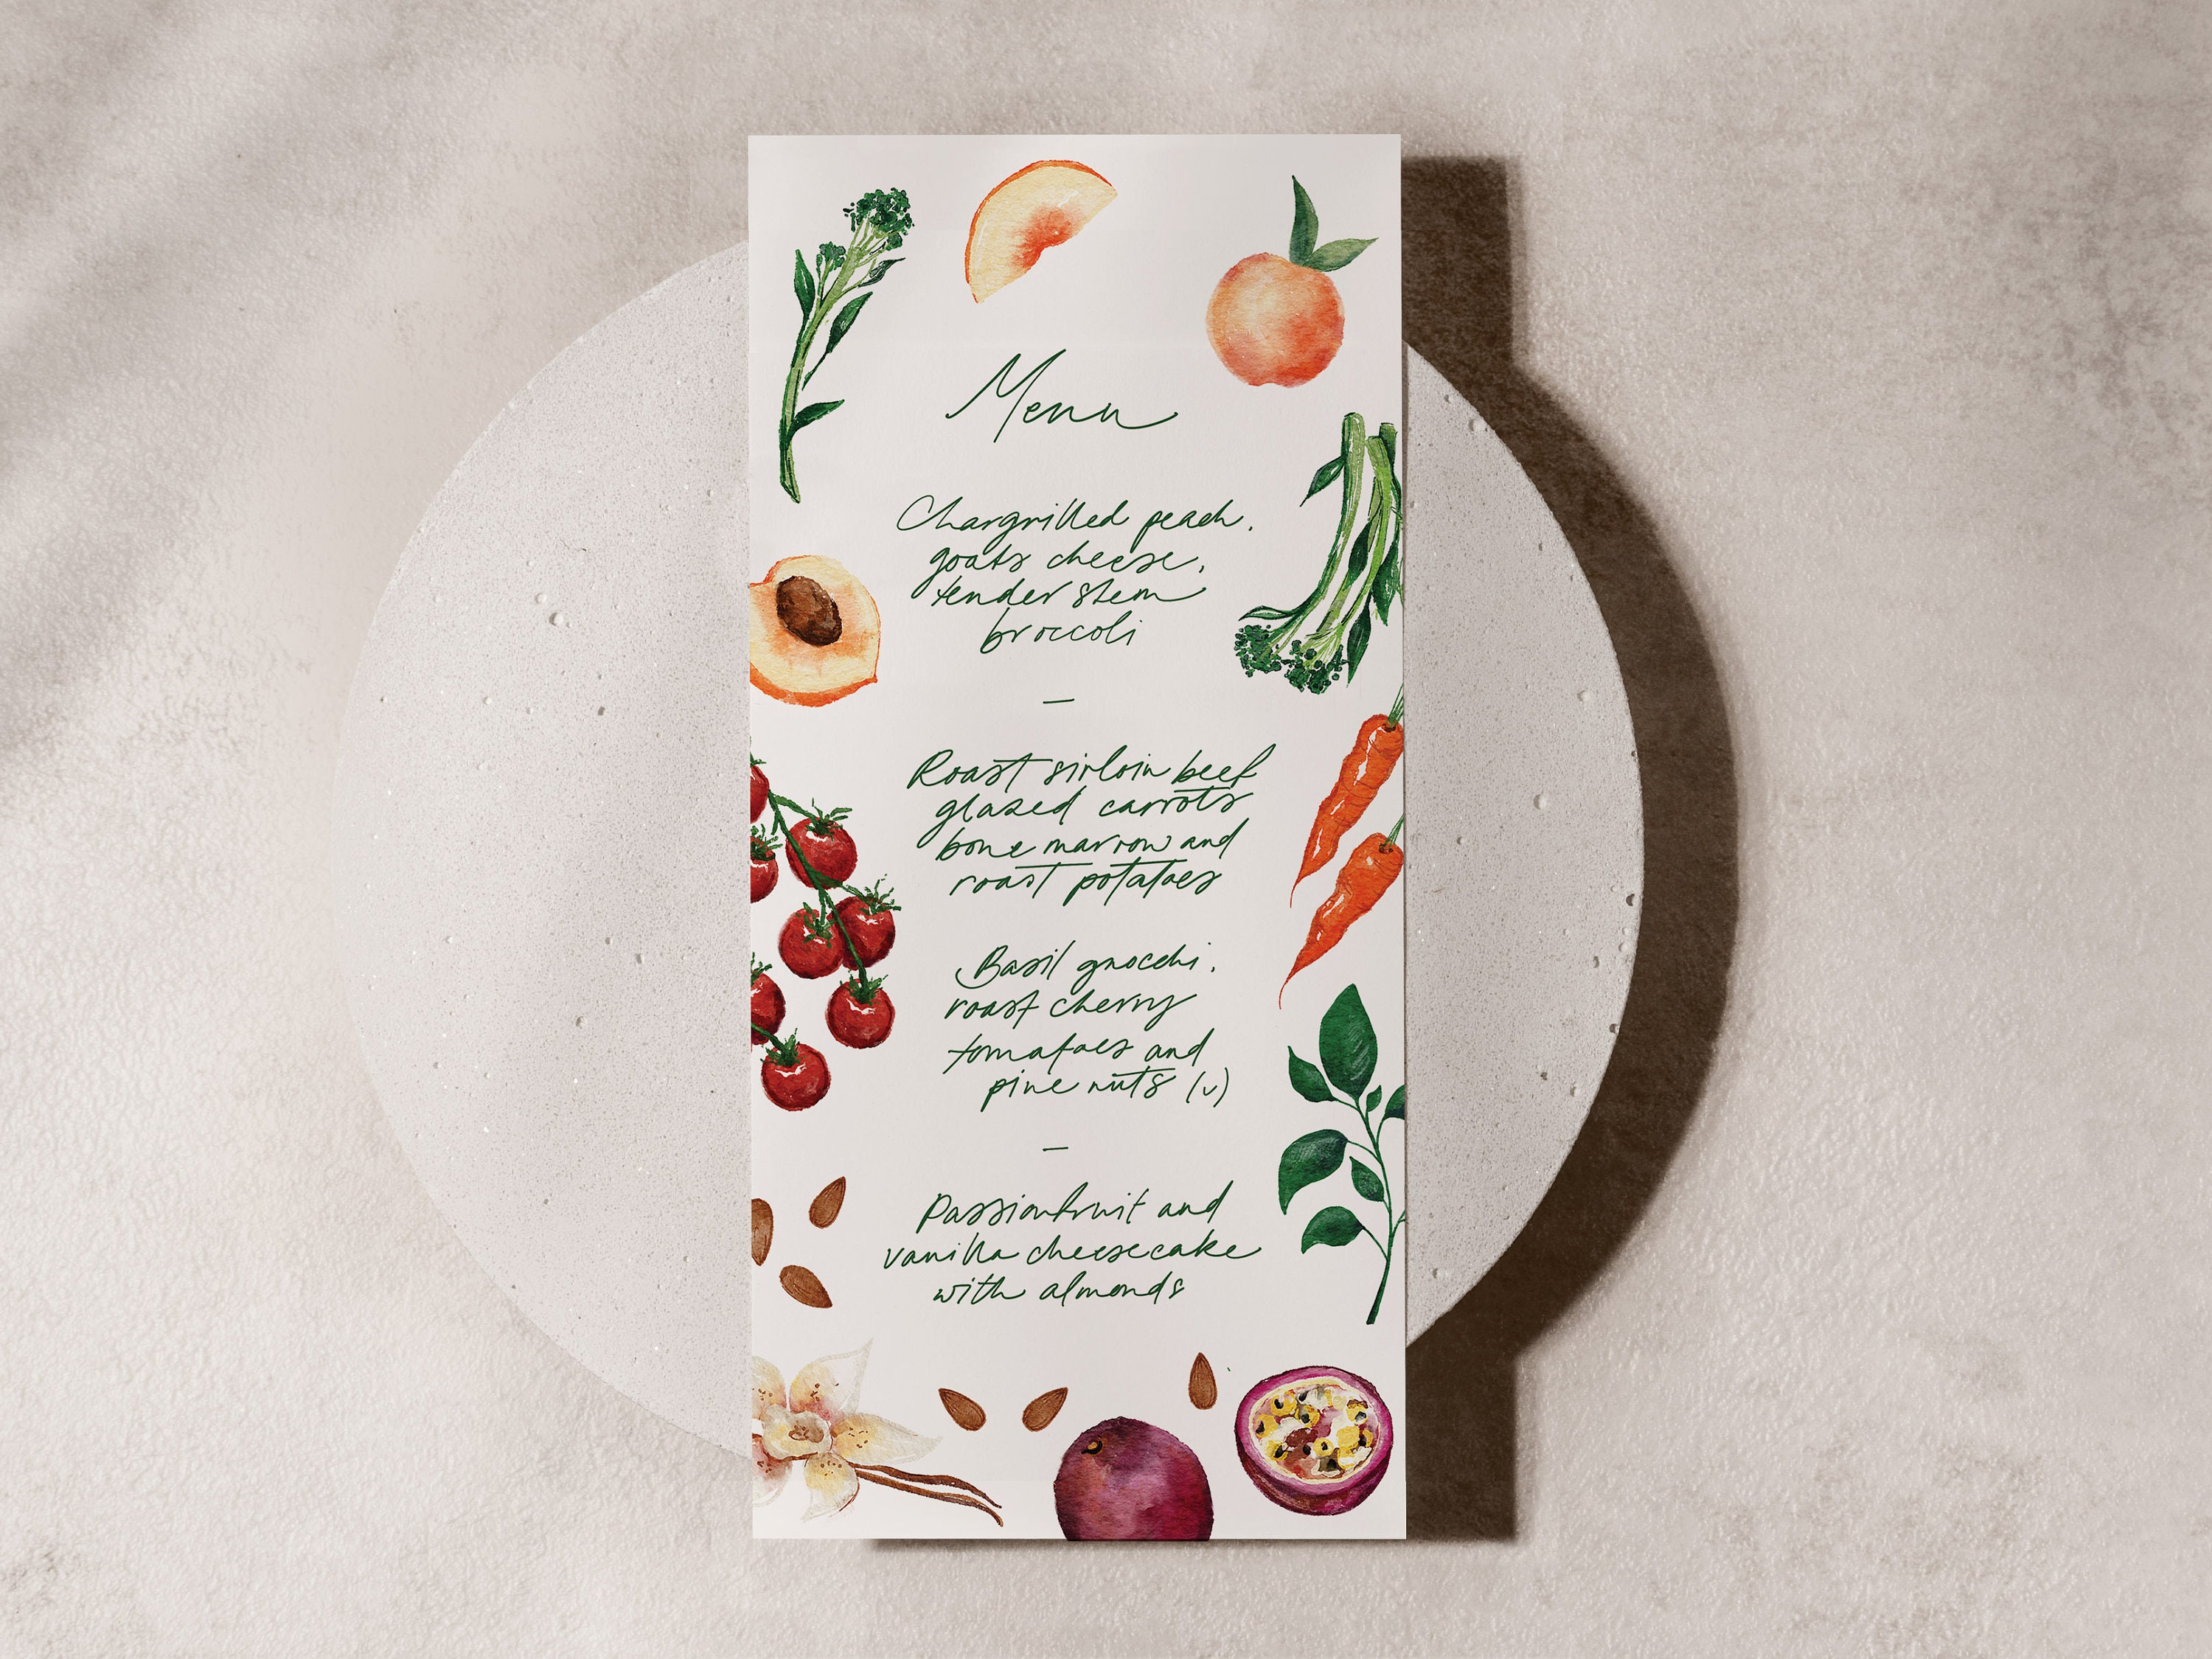 Custom Wedding Menu Design, Illustrated Watercolour Food/Drinks - Wedding, Restaurant, Dinner Party/Event, Hand Painted Brush Lettering